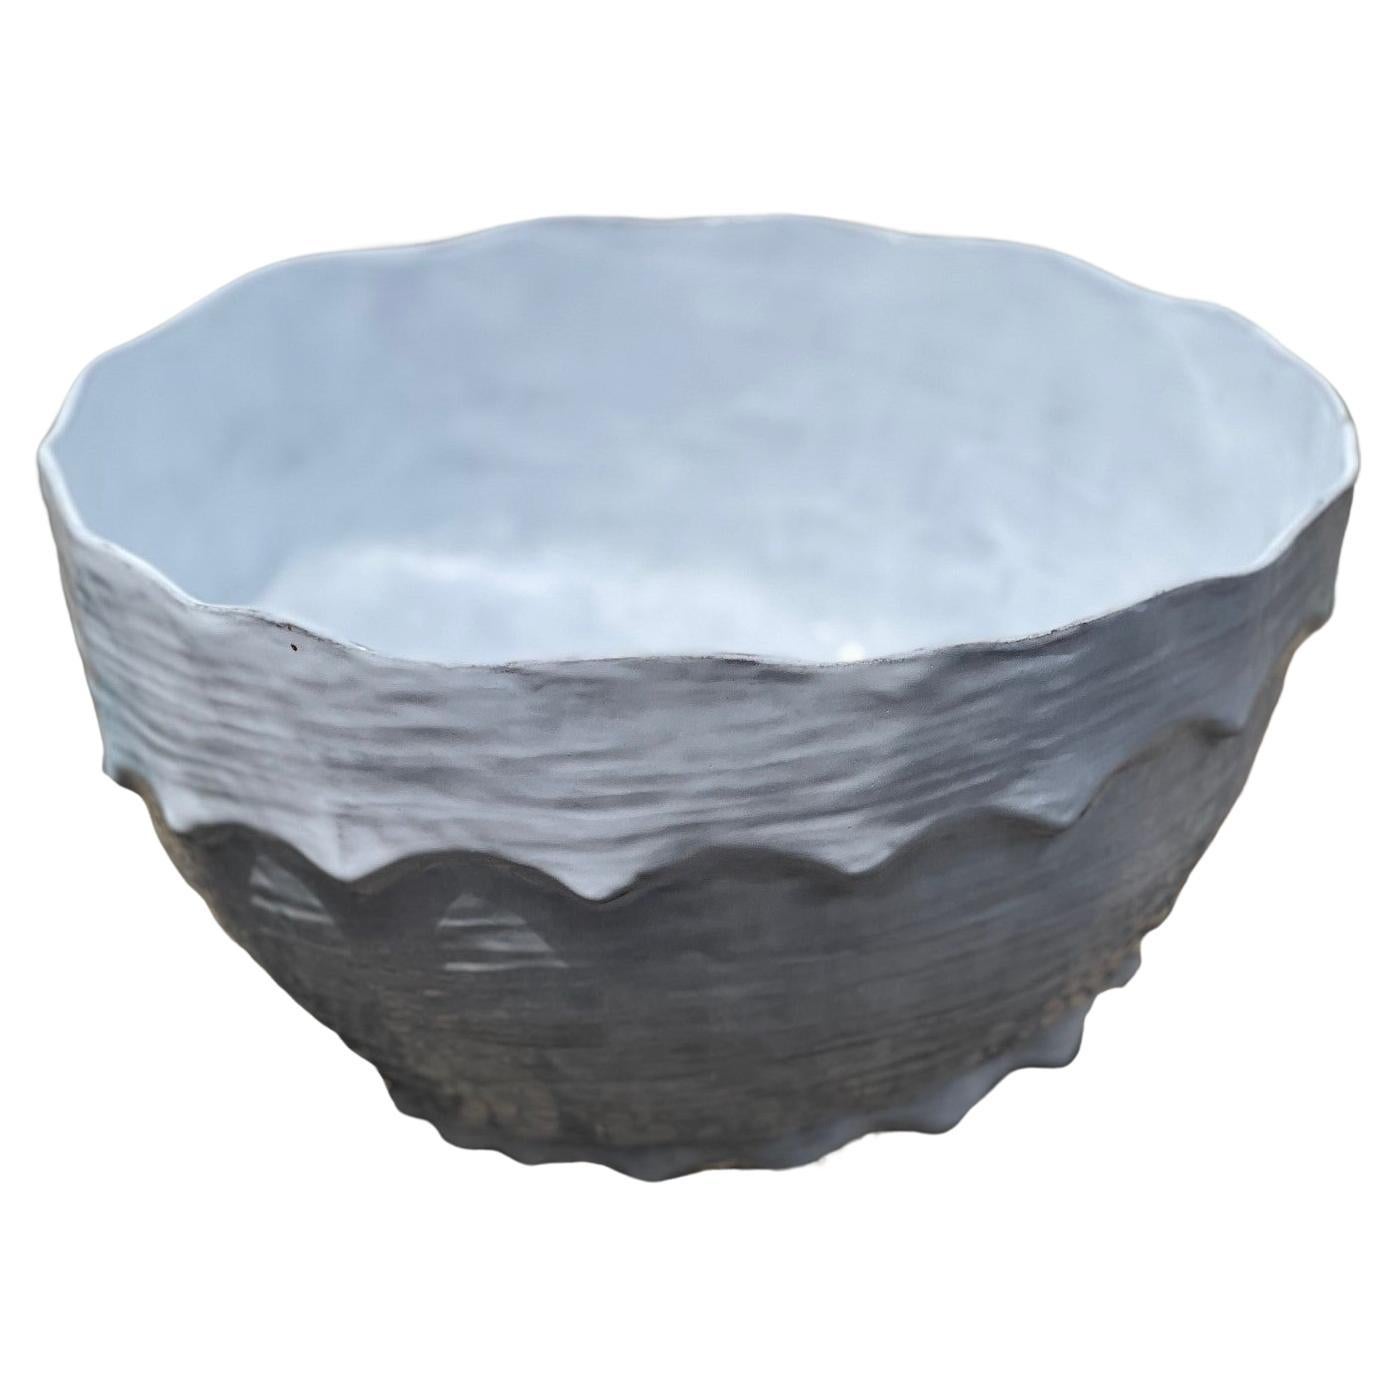 Vietri "Incanto Mare" Italian Stoneware Large Serving Bowl